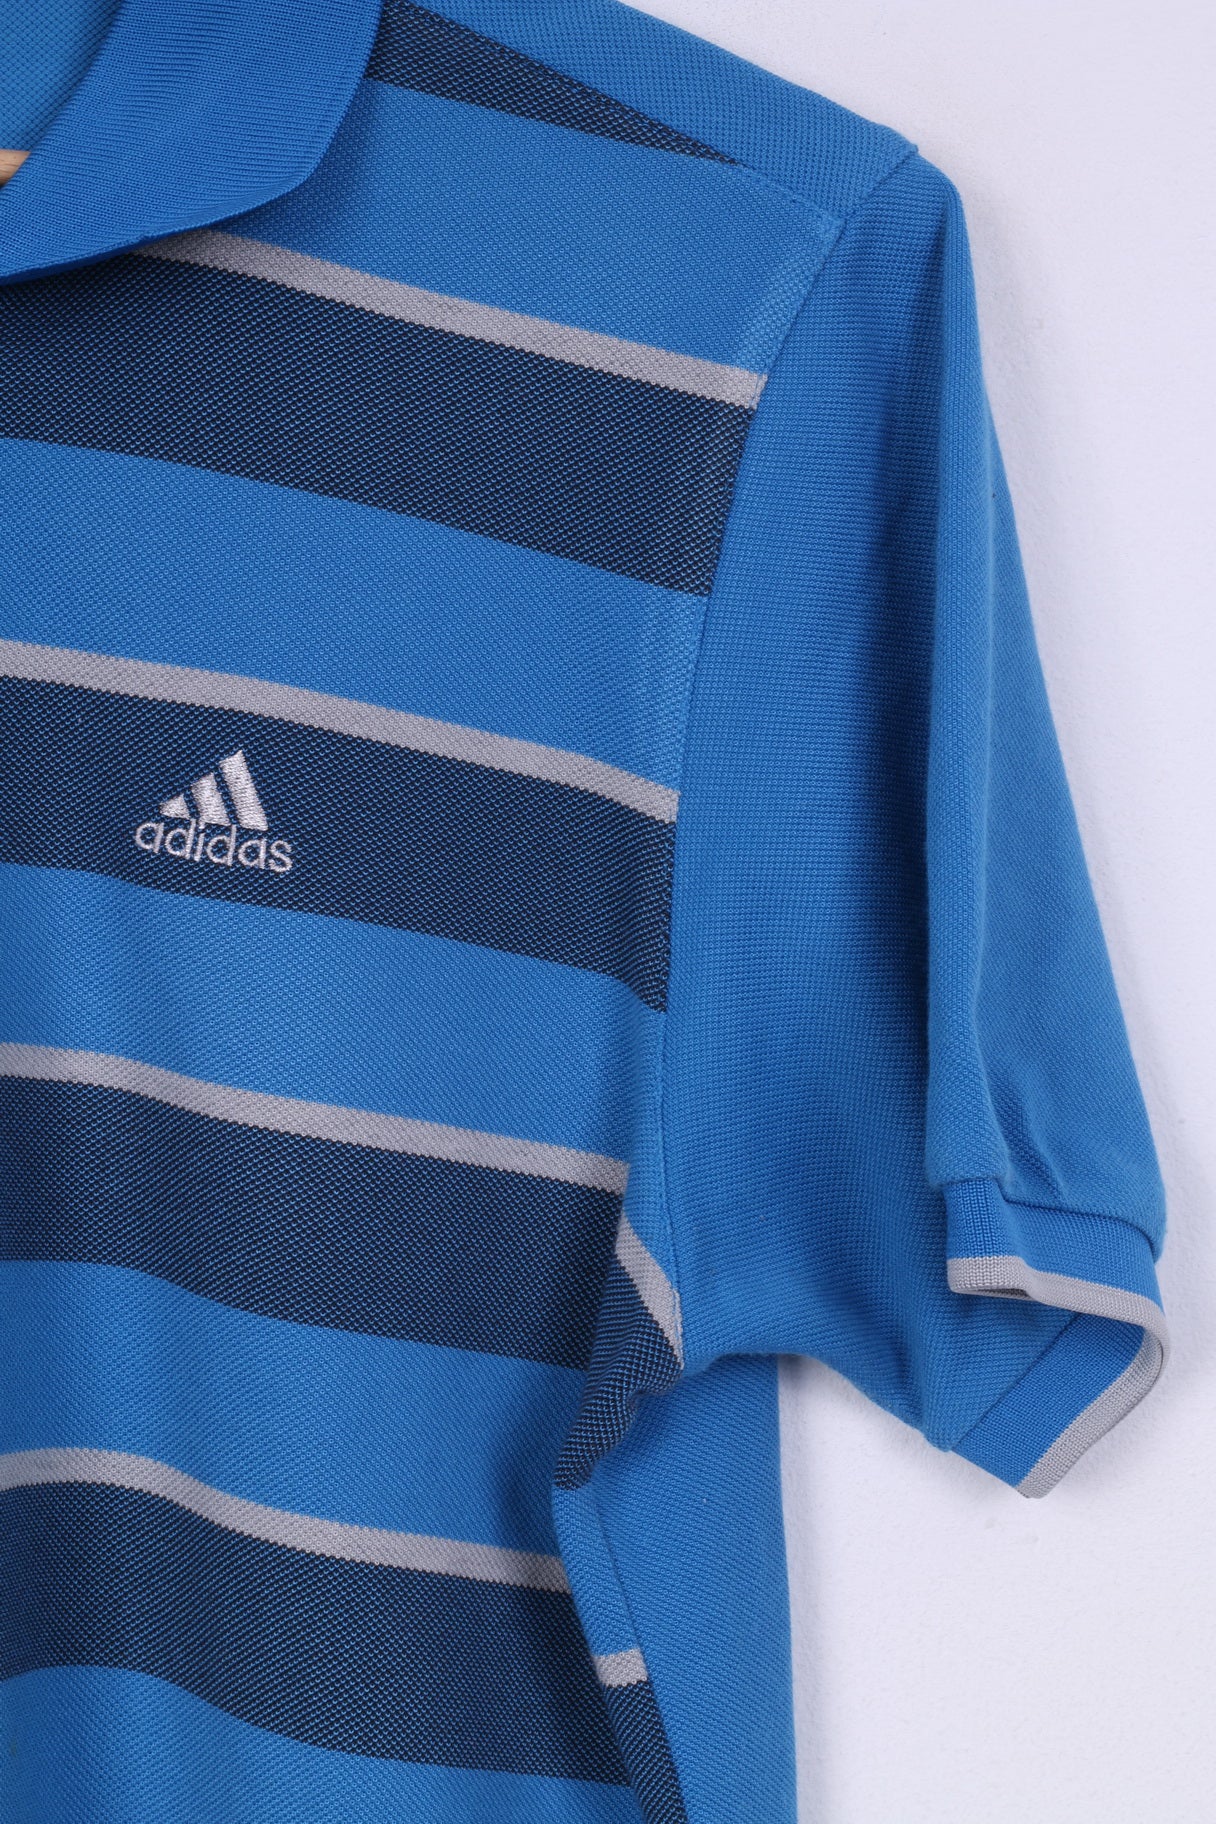 Adidas Mens M Polo Shirt Blue Striped Short Sleeve Cotton Blend Summer Top